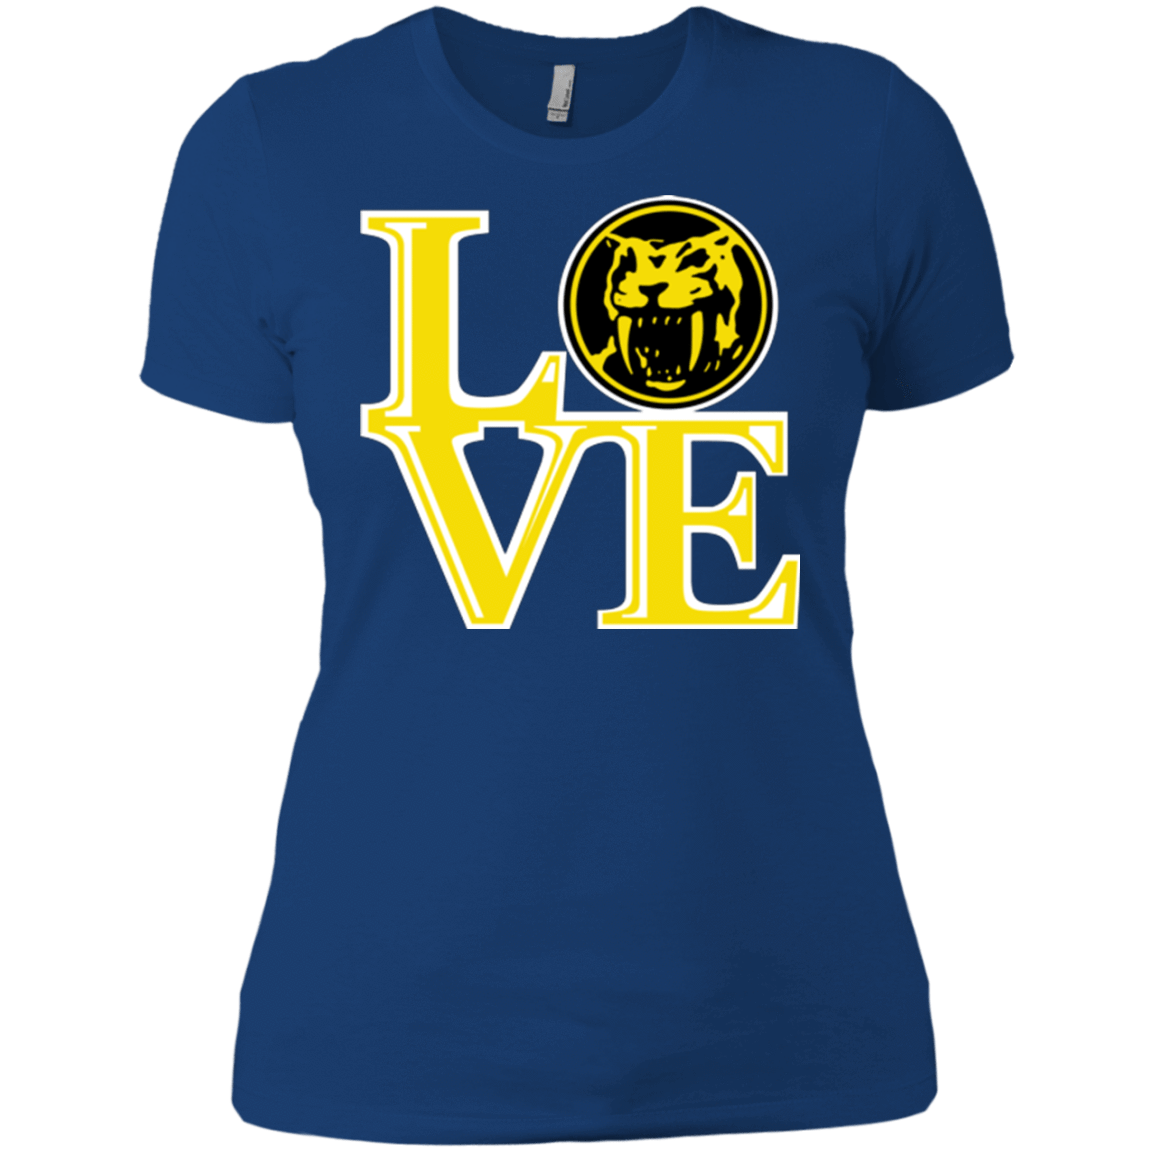 T-Shirts Royal / X-Small Yellow Ranger LOVE Women's Premium T-Shirt